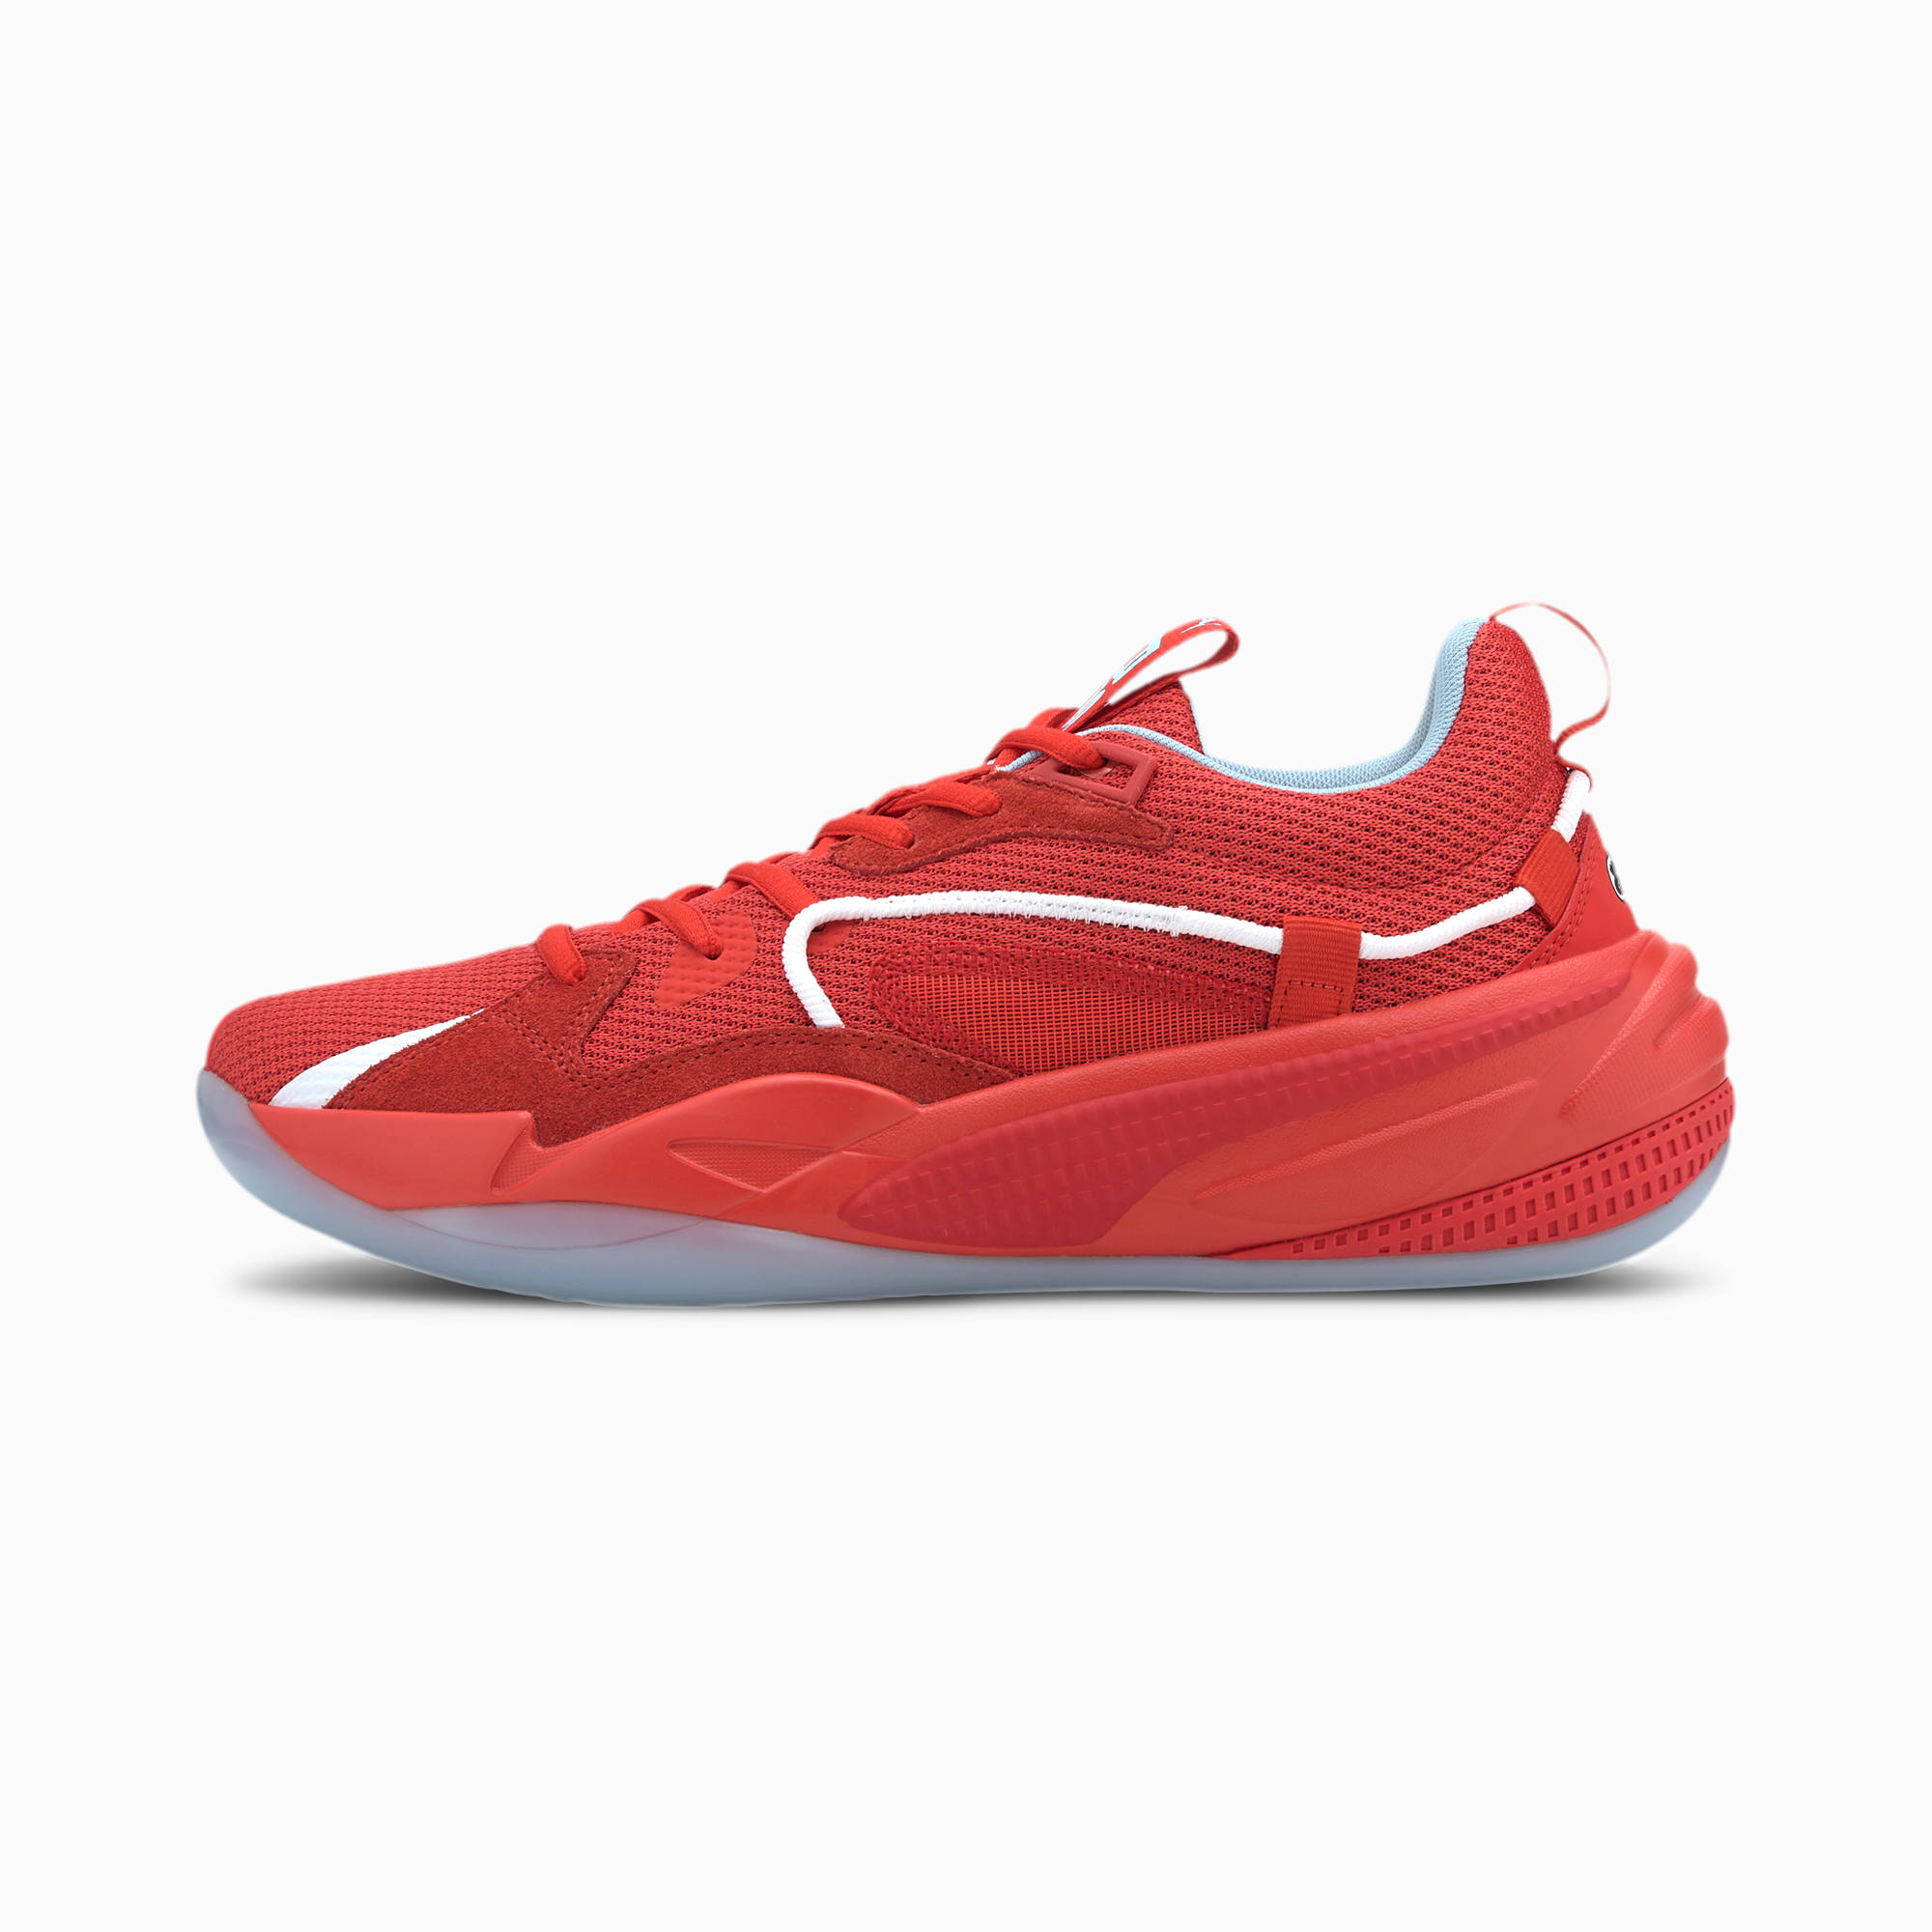 puma basketball shoes red